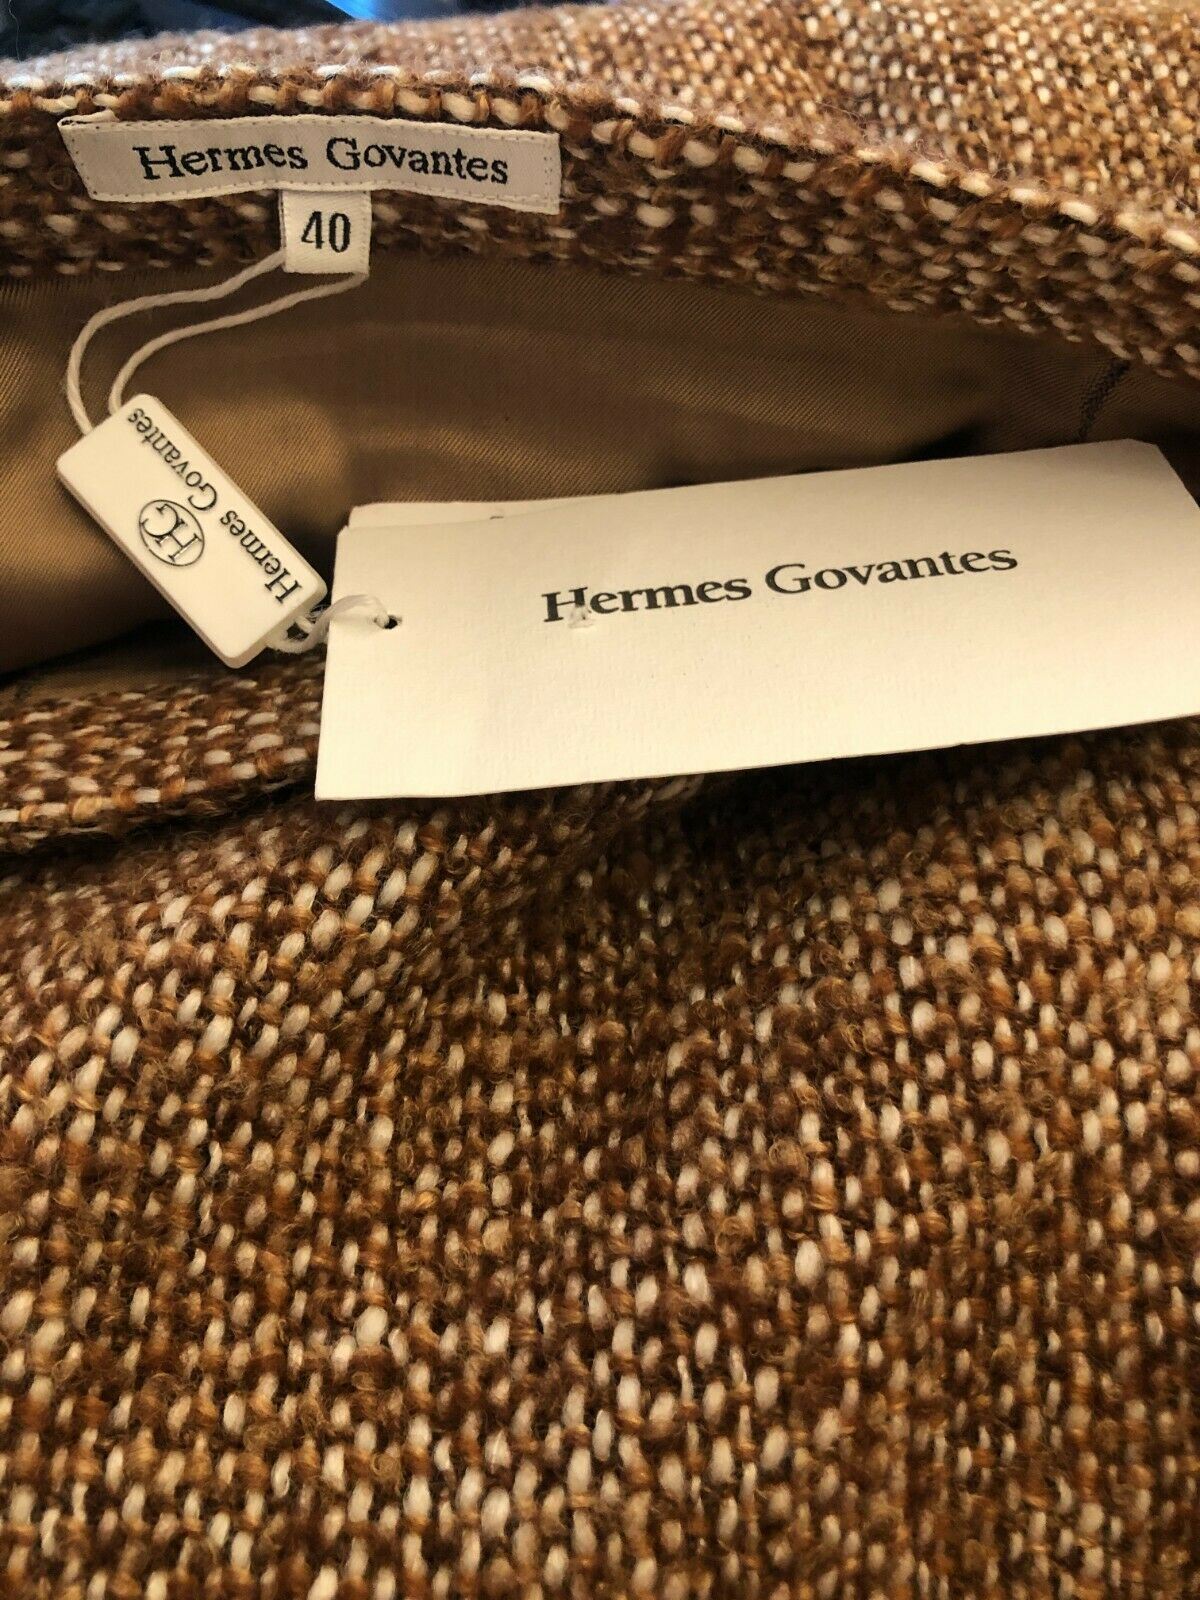 Hermes Govantes Rust Brown Tweed Pencil Skirt UK 10 US 6 EU 38 IT 42 BNWT Timeless Fashions